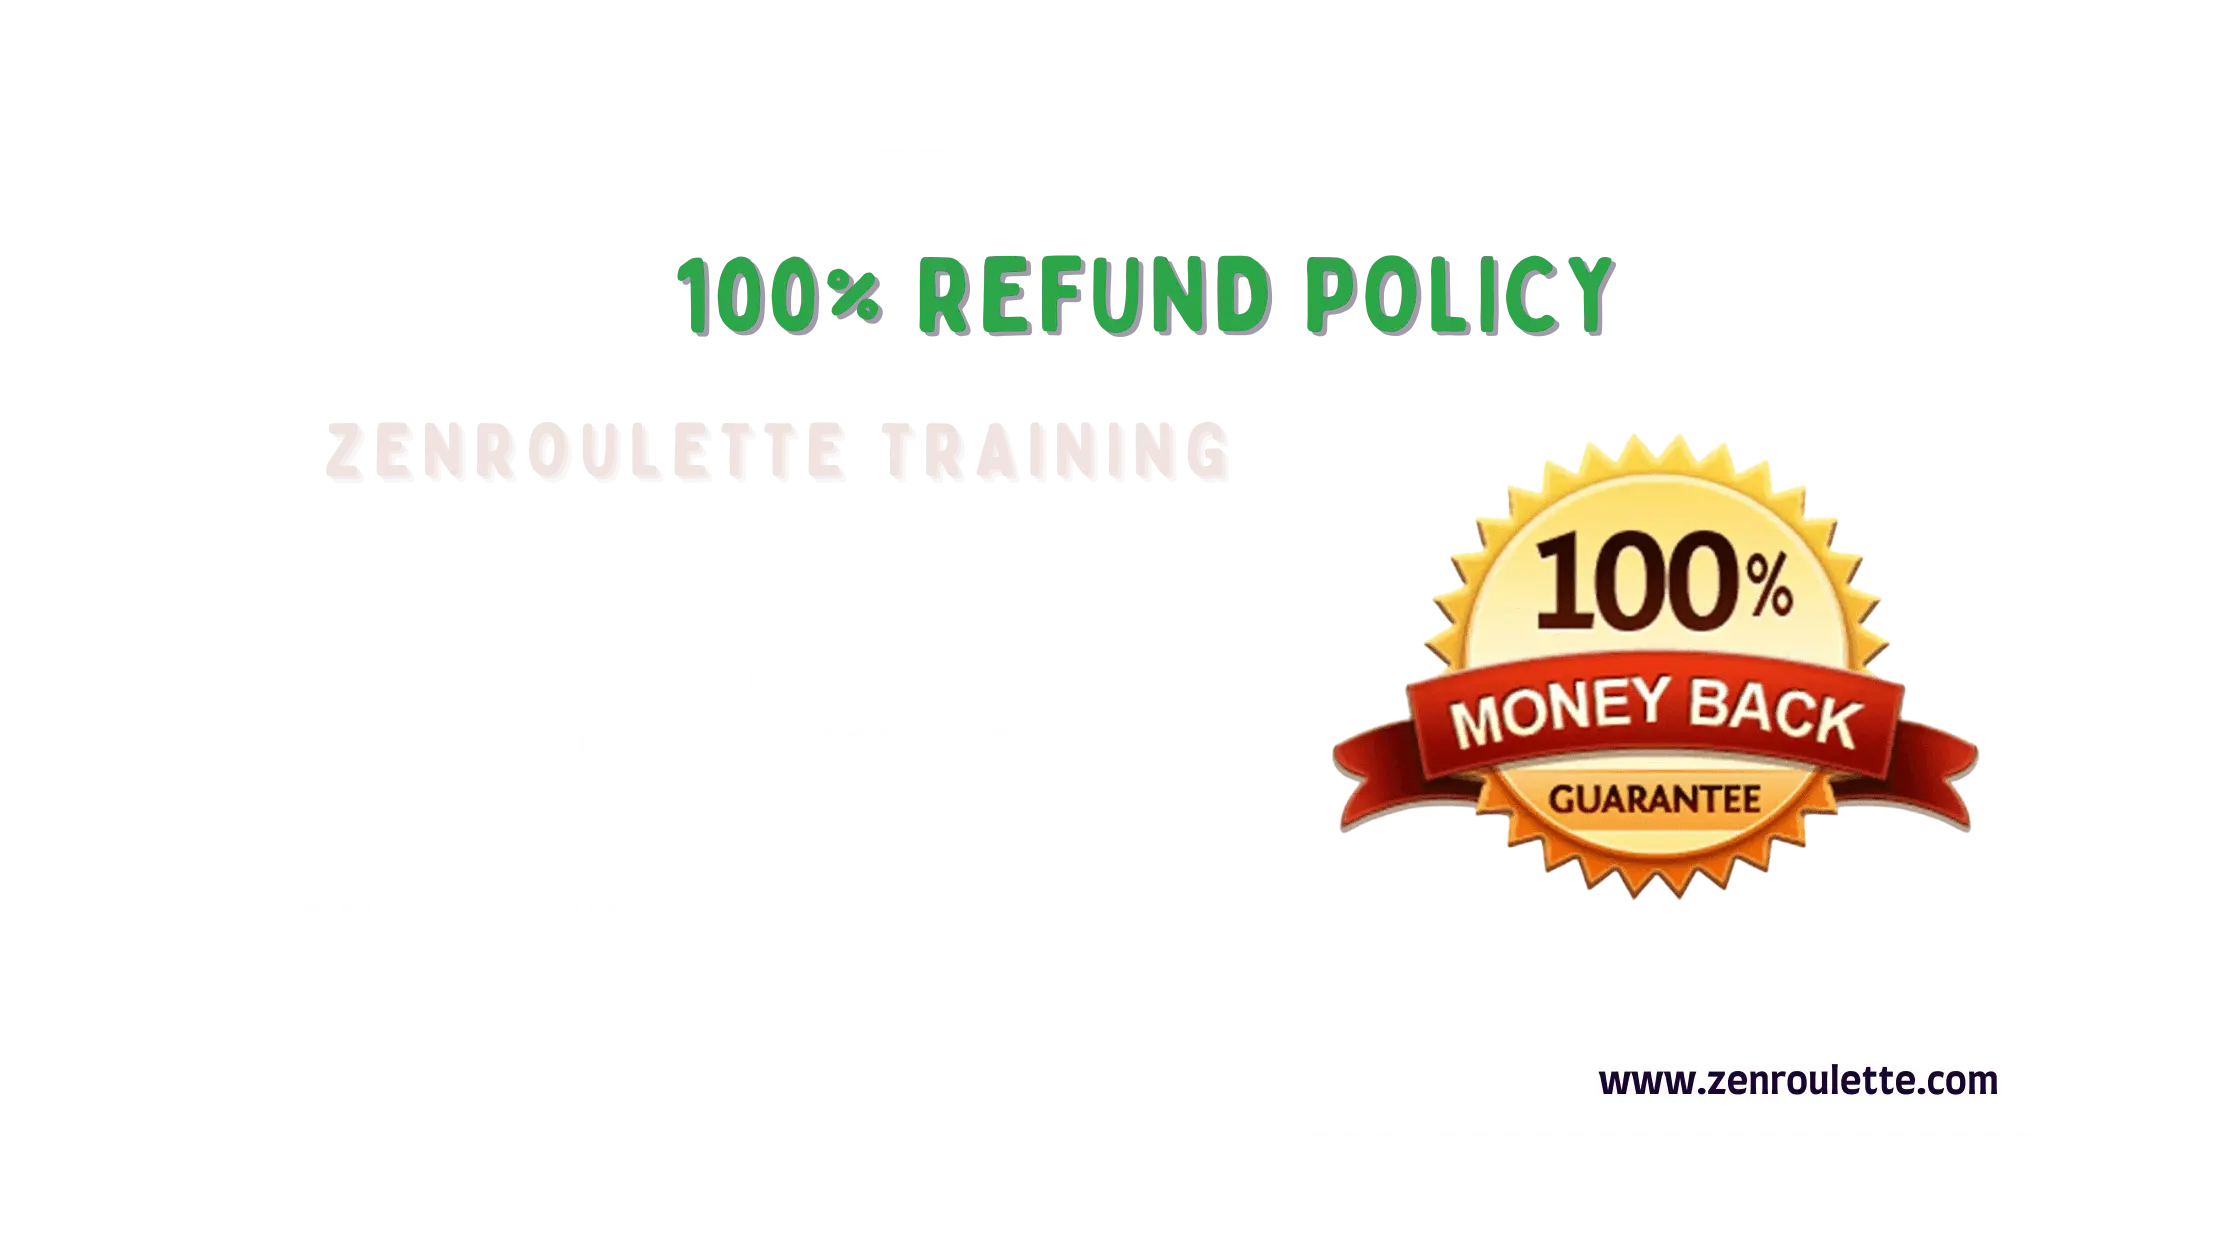 Zenroulette Training - 100% Refund Policy